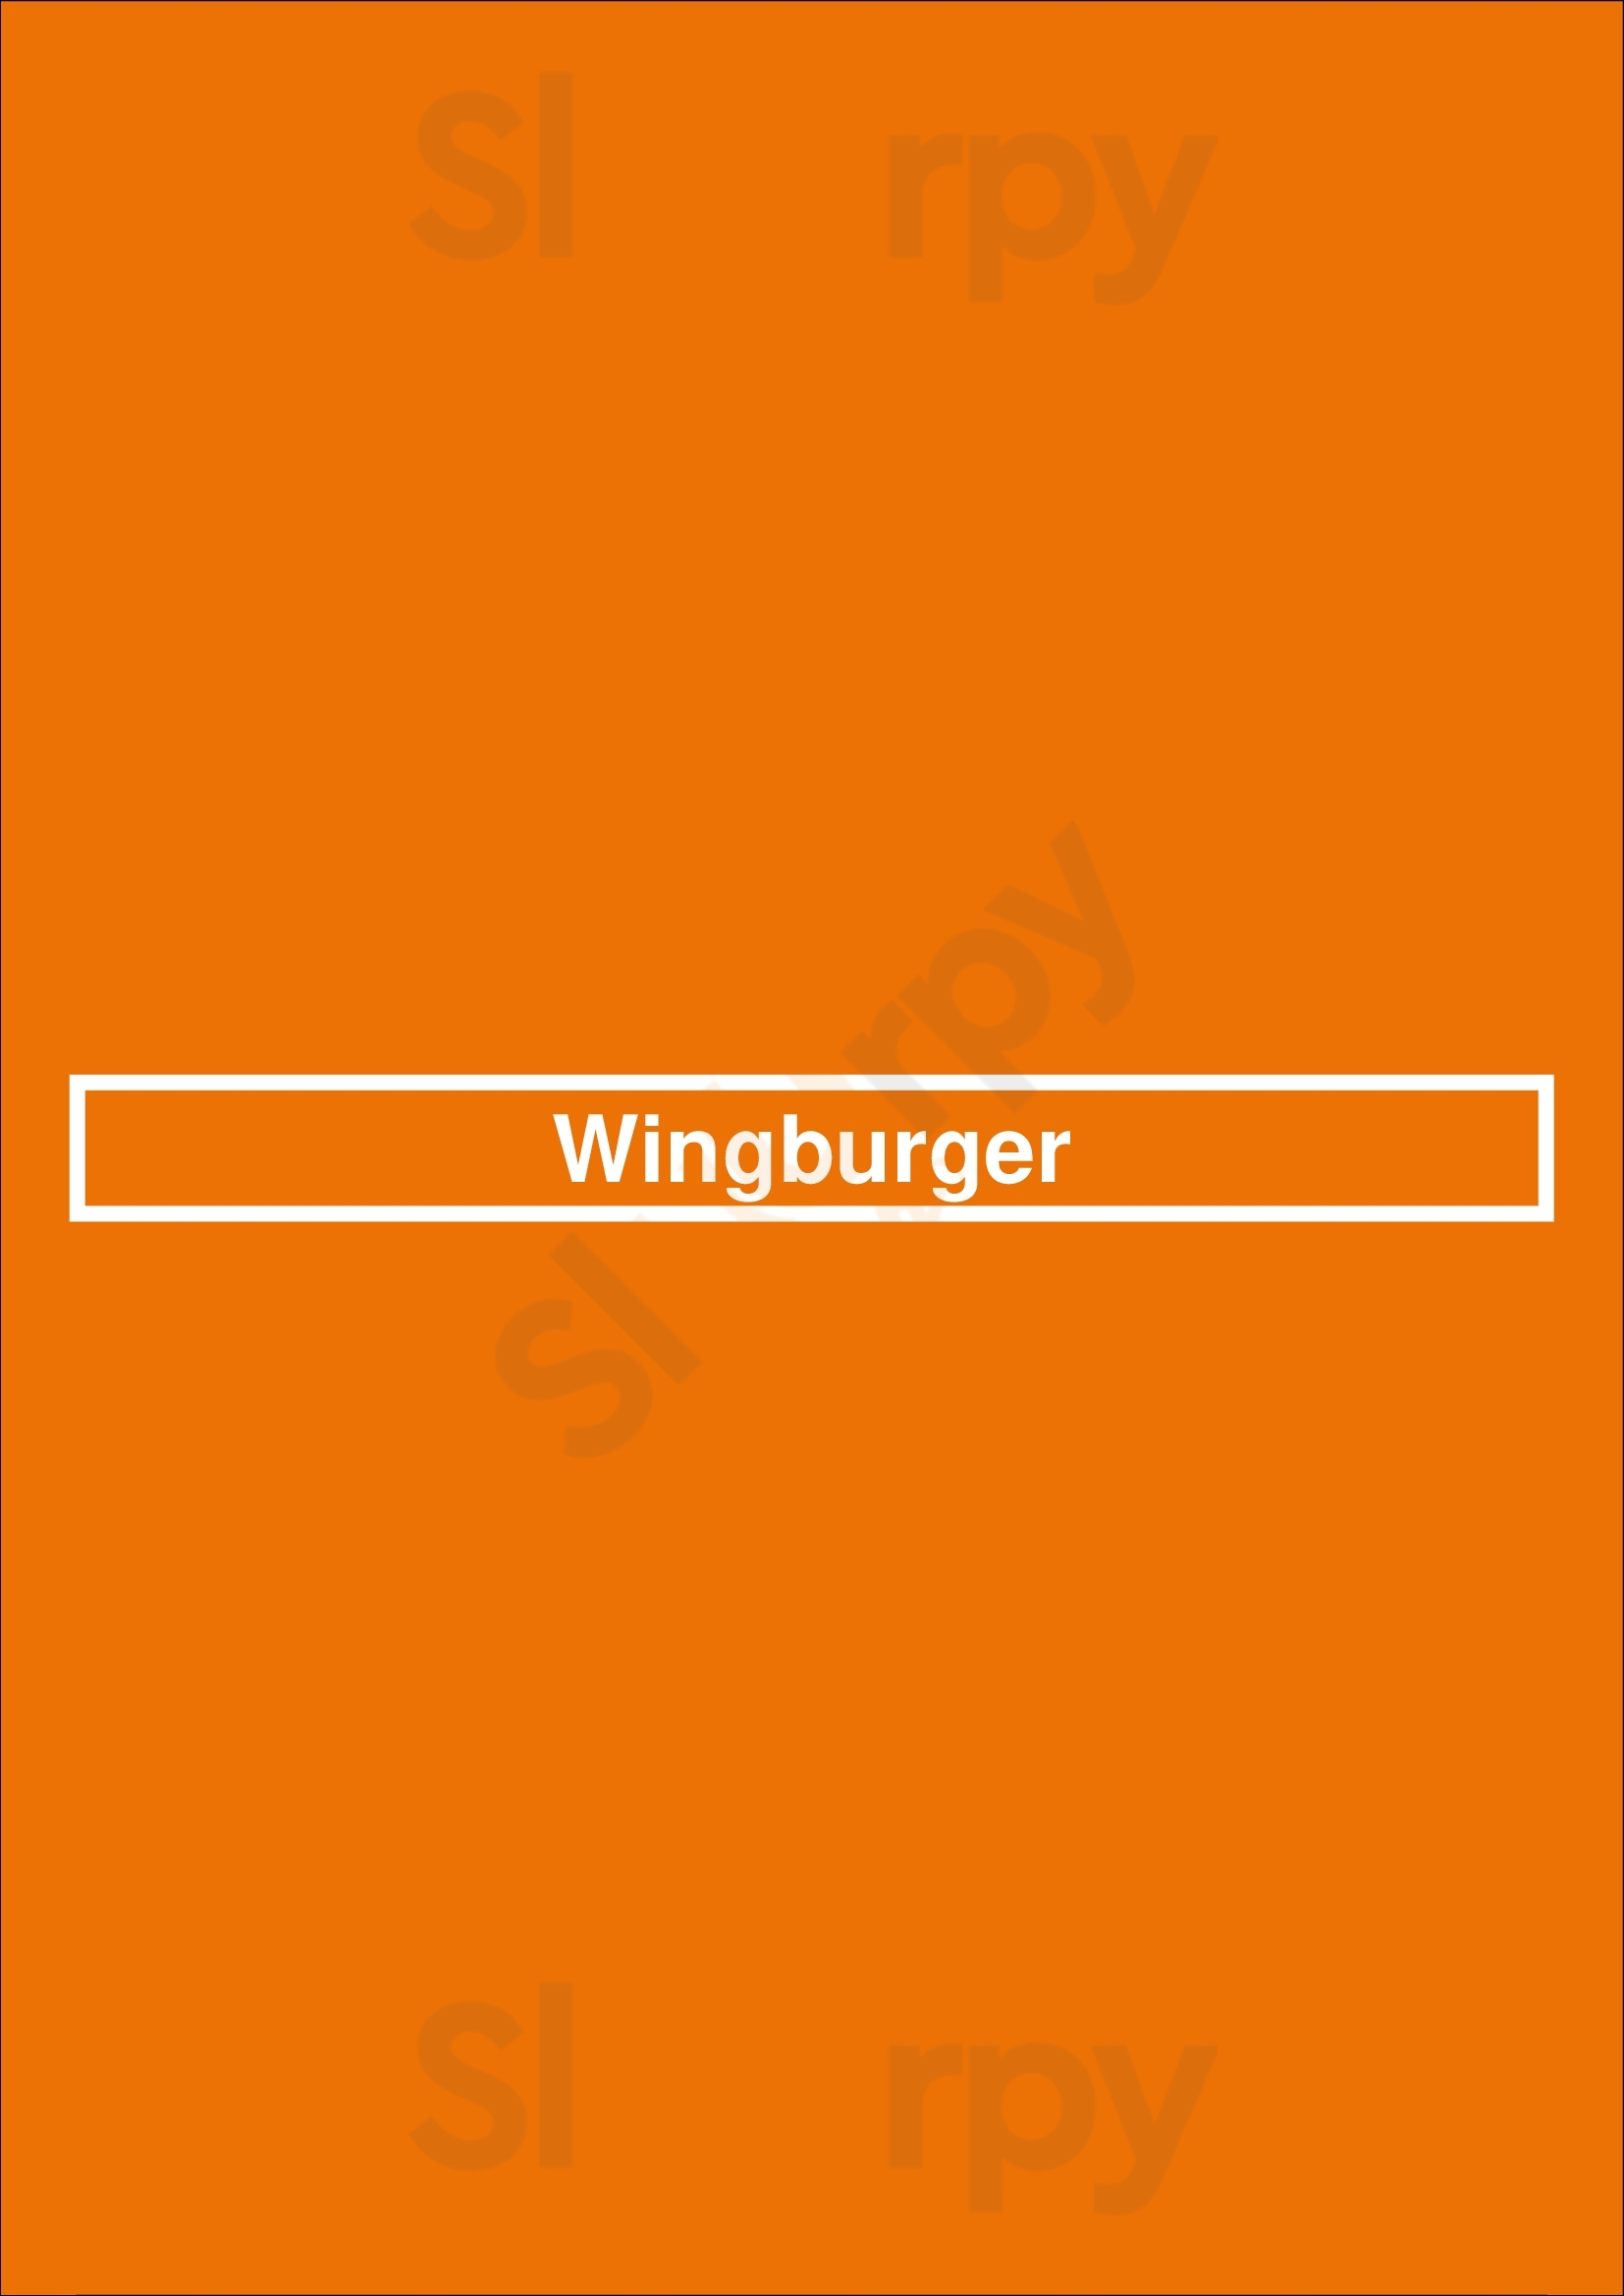 Wingburger Toronto Menu - 1